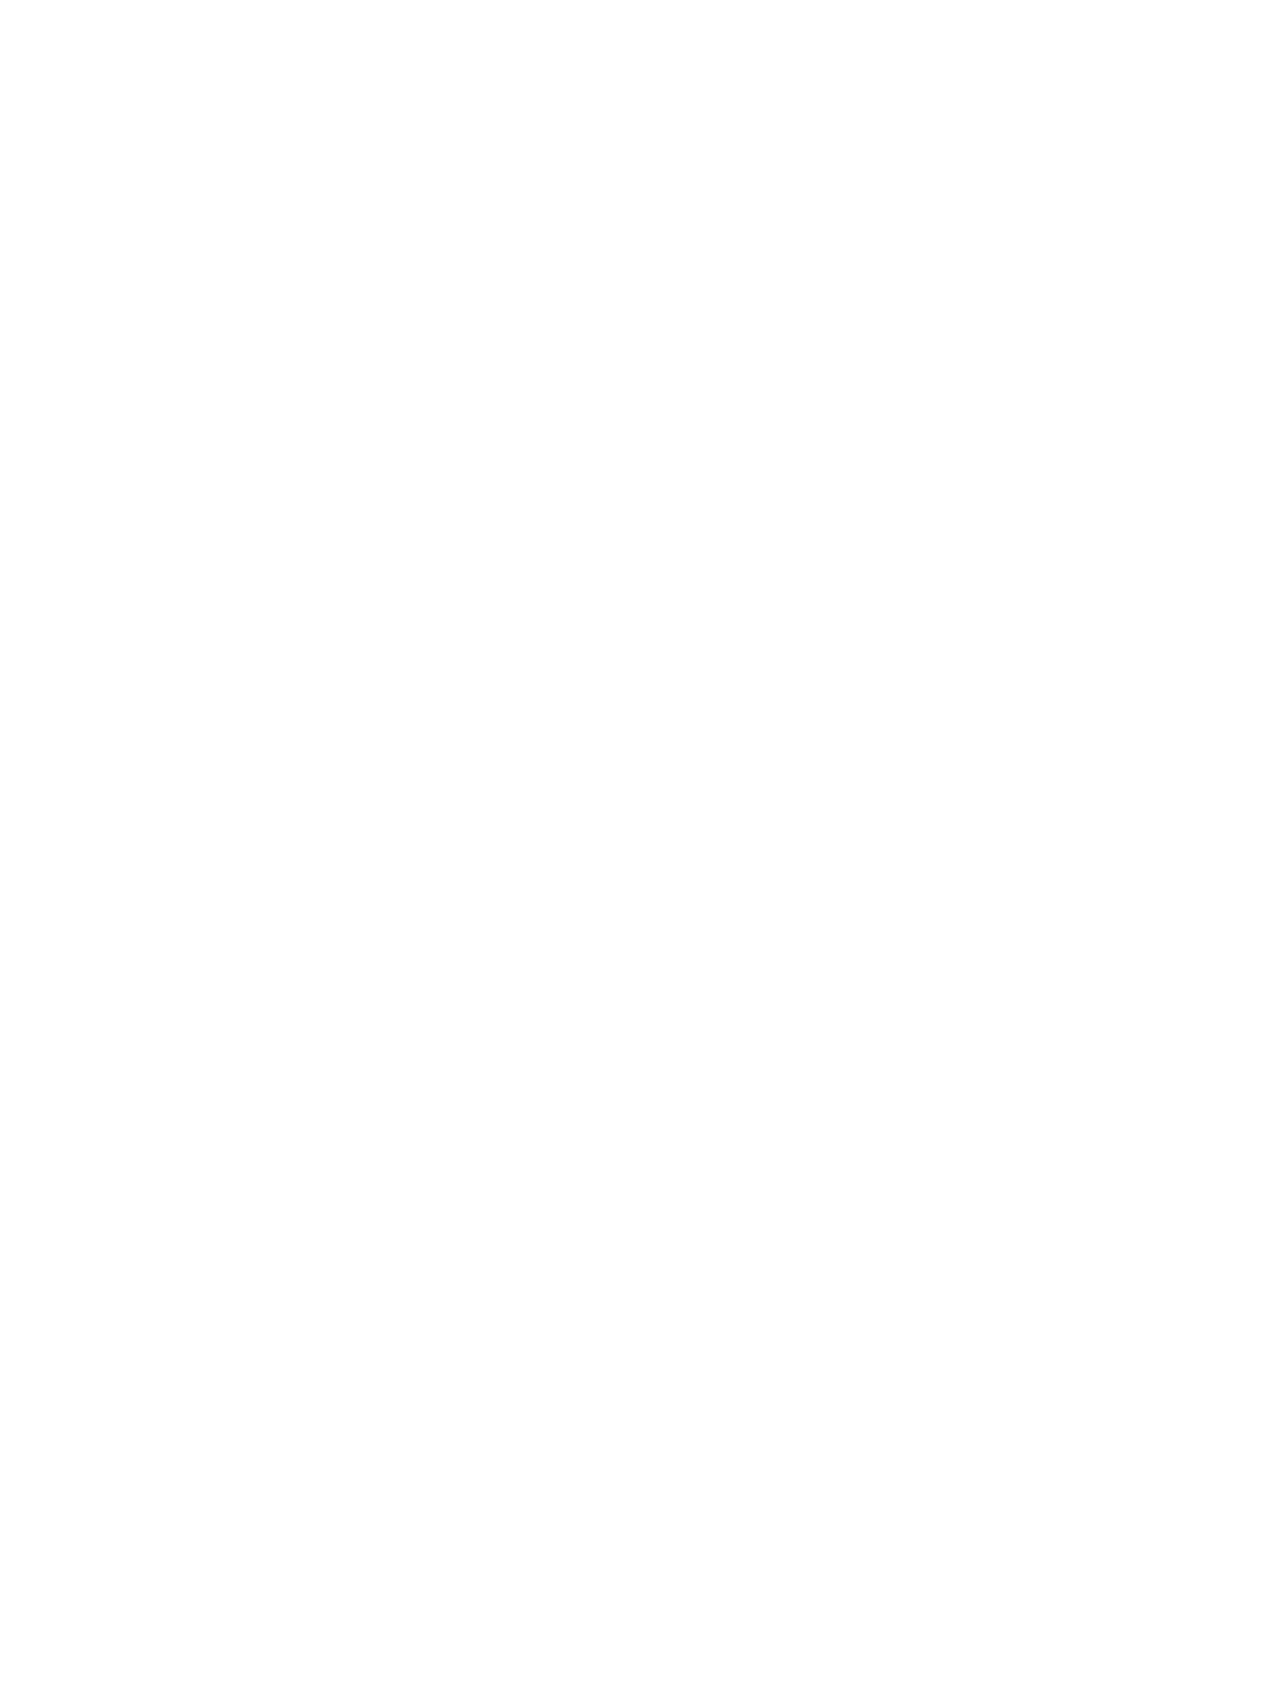 znak zodiaku - baran